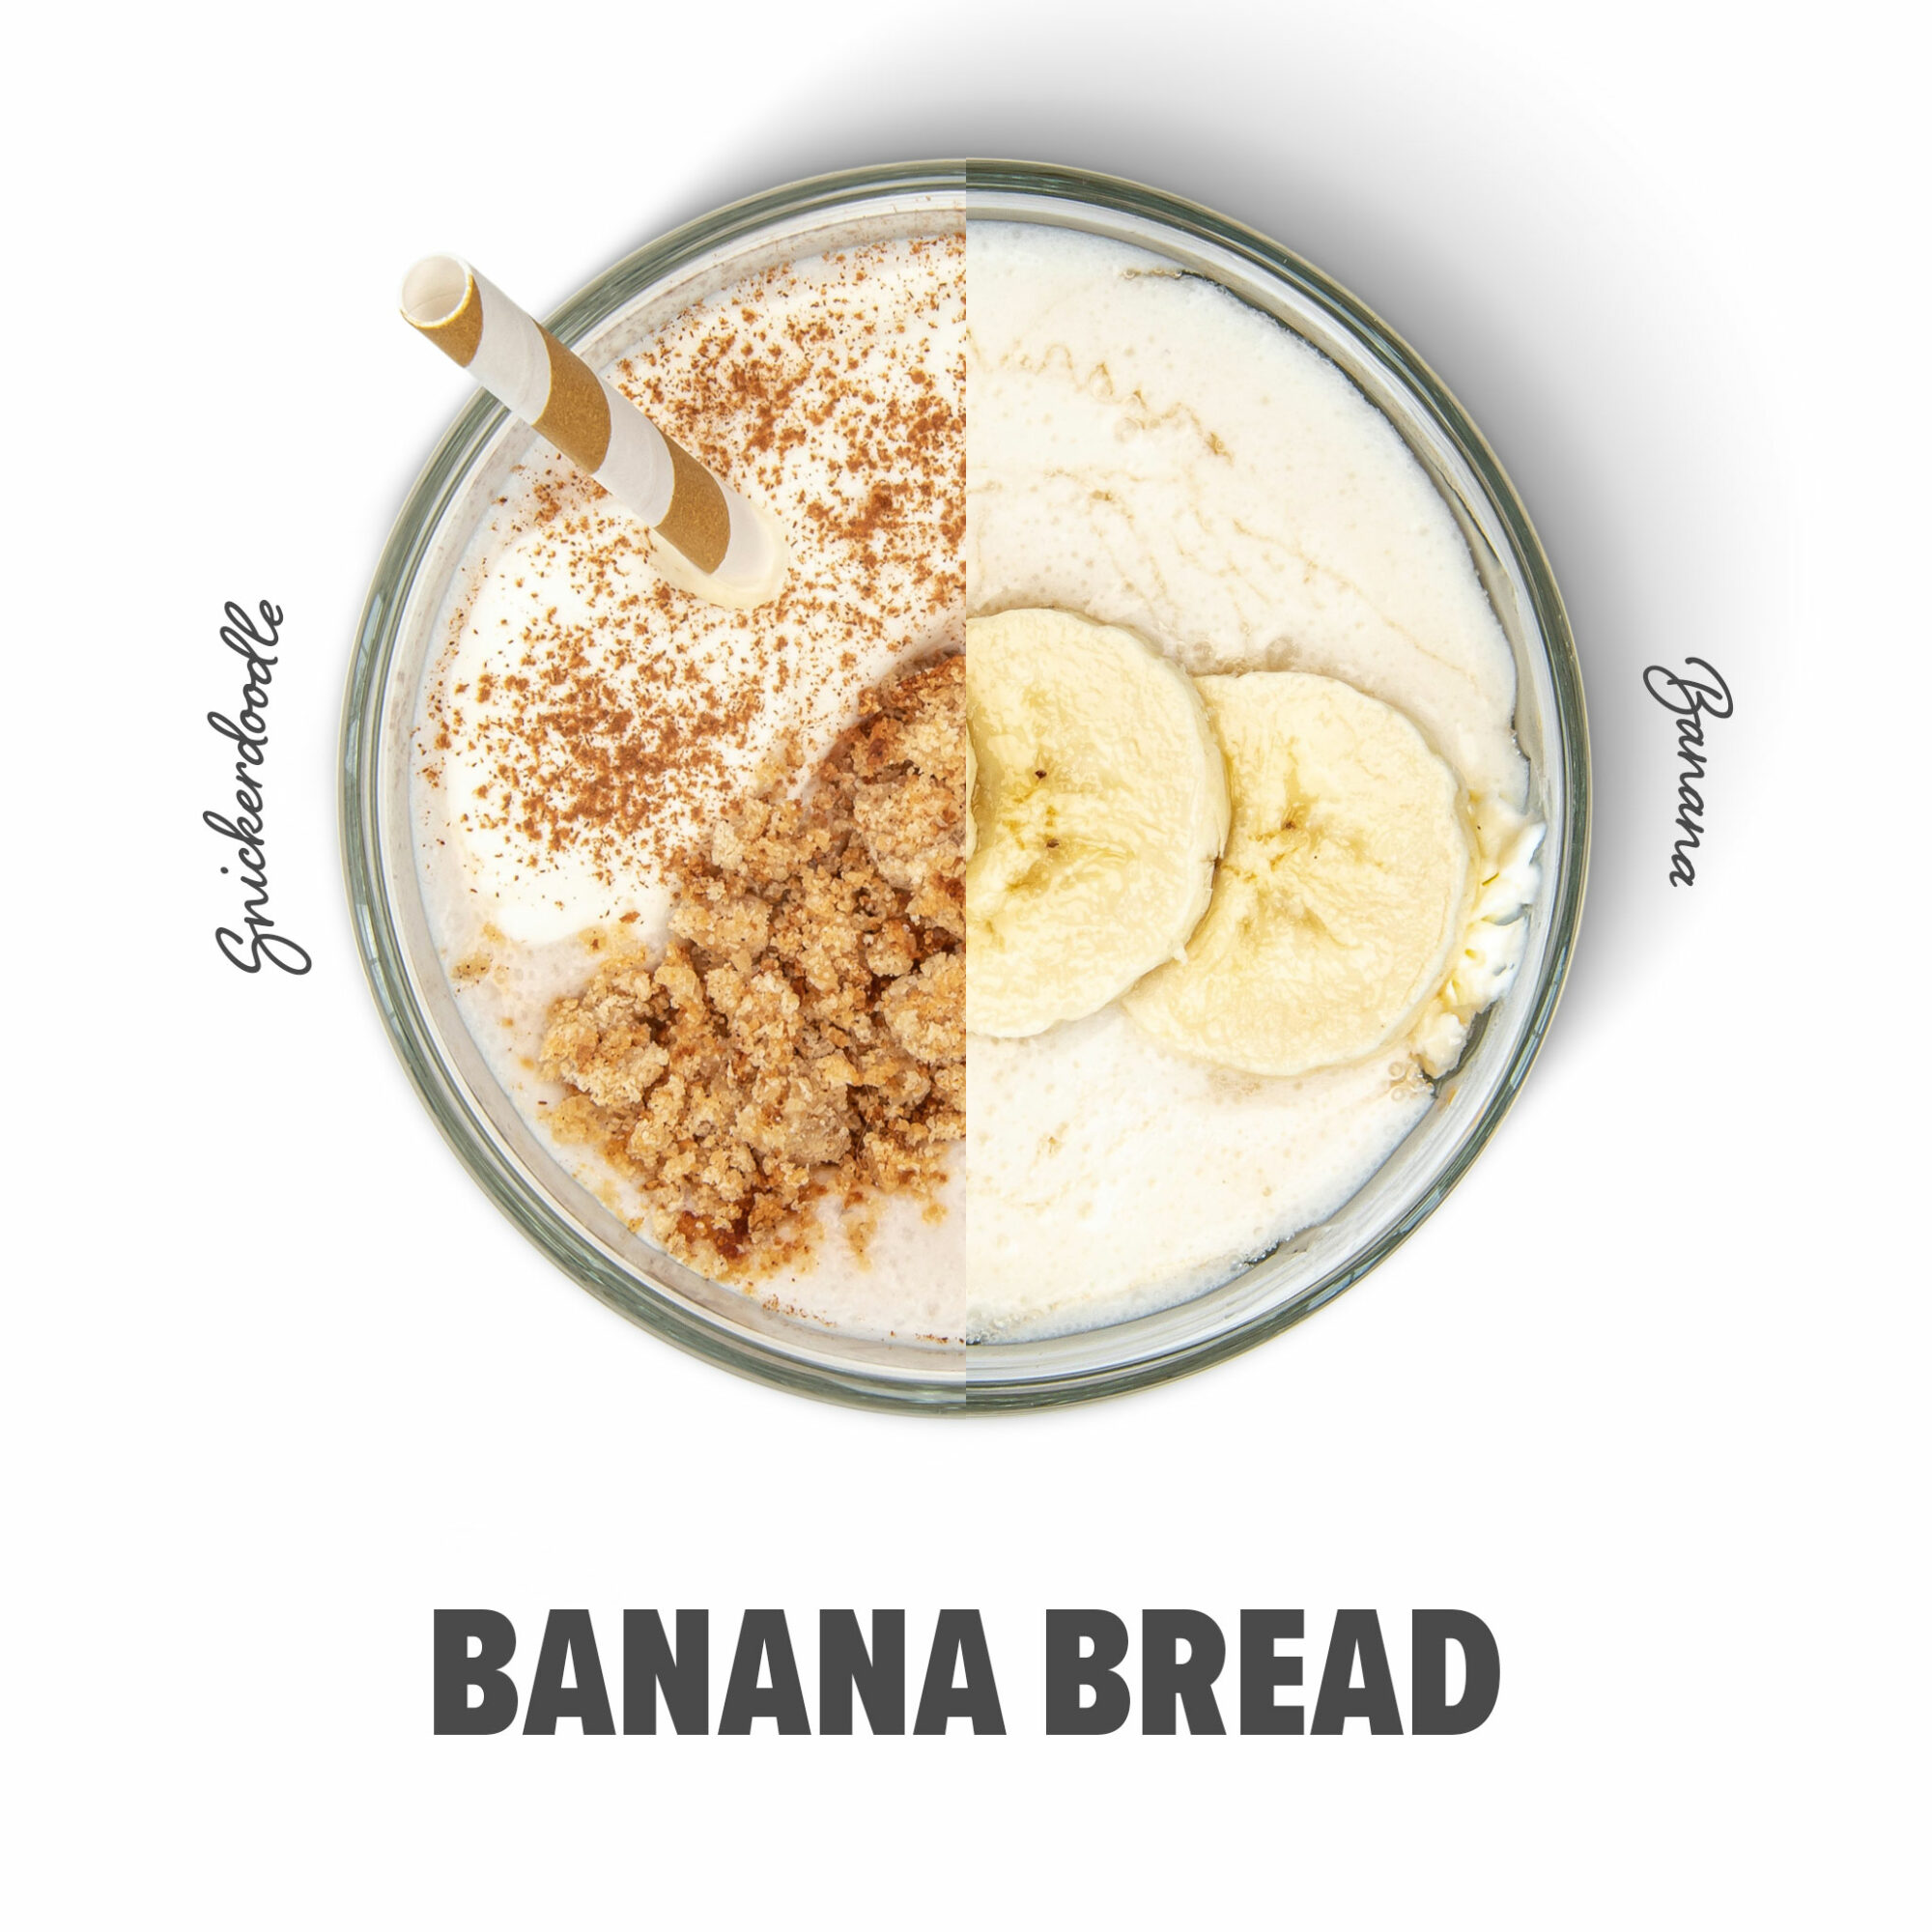 Banana Bread shake image